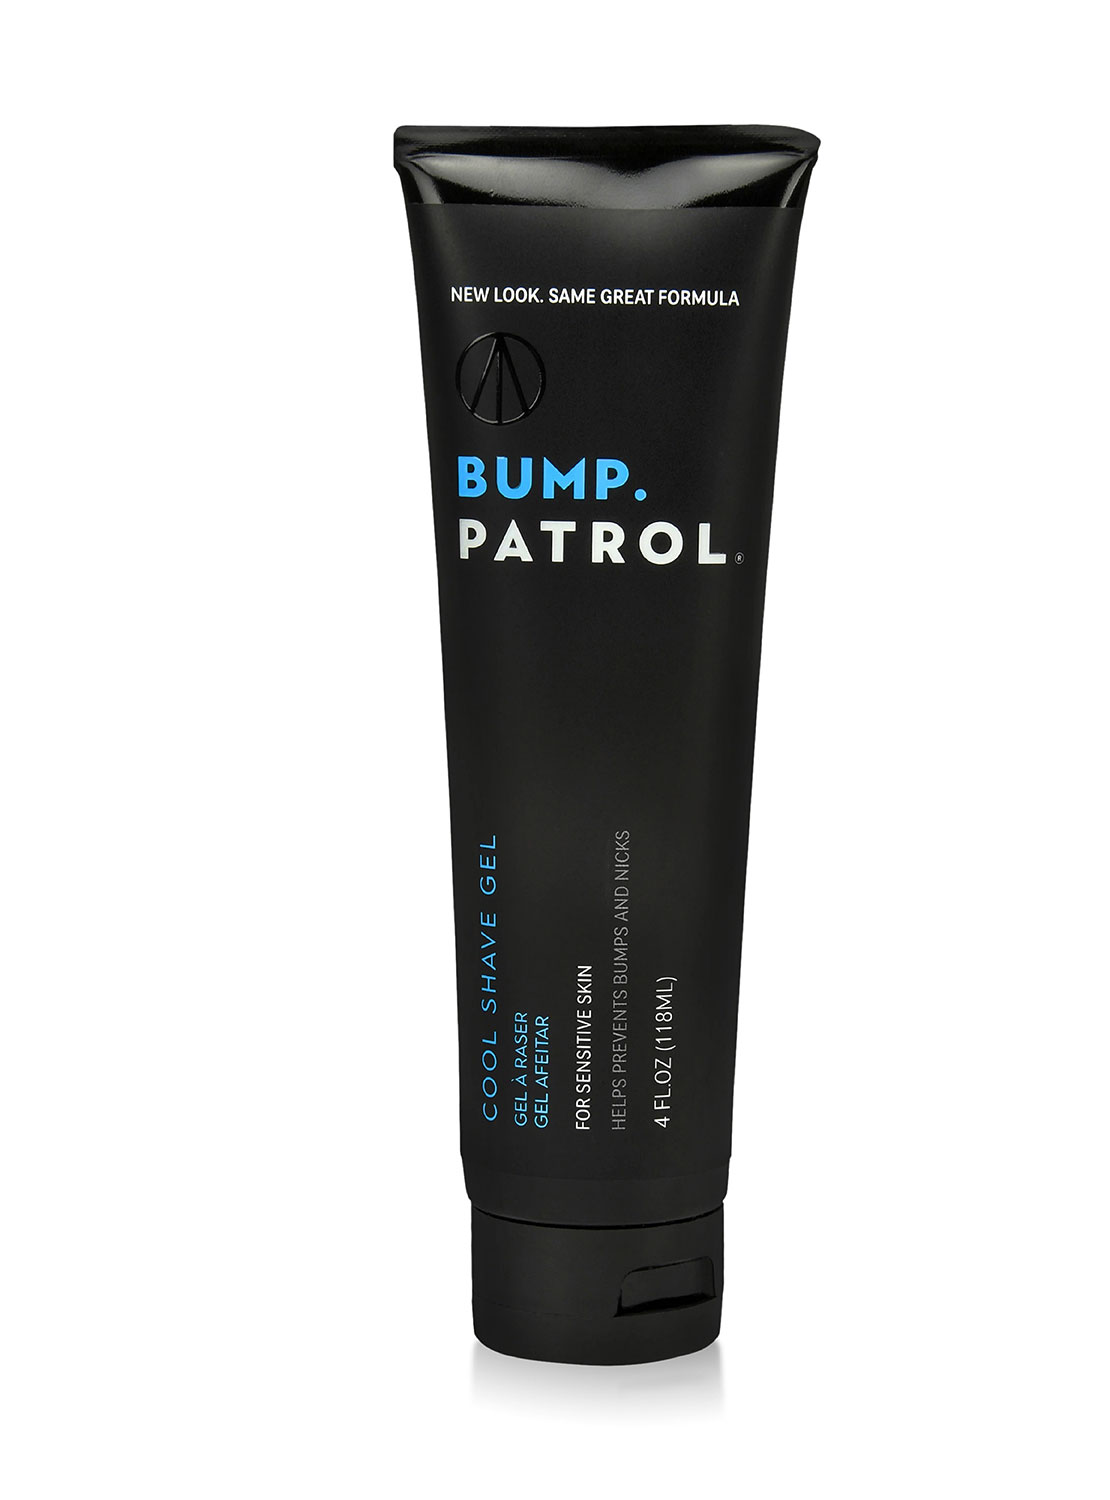 Bump Patrol Cool Shave Gel with Menthol for Sensitive Skin (4 oz) - image 1 of 5